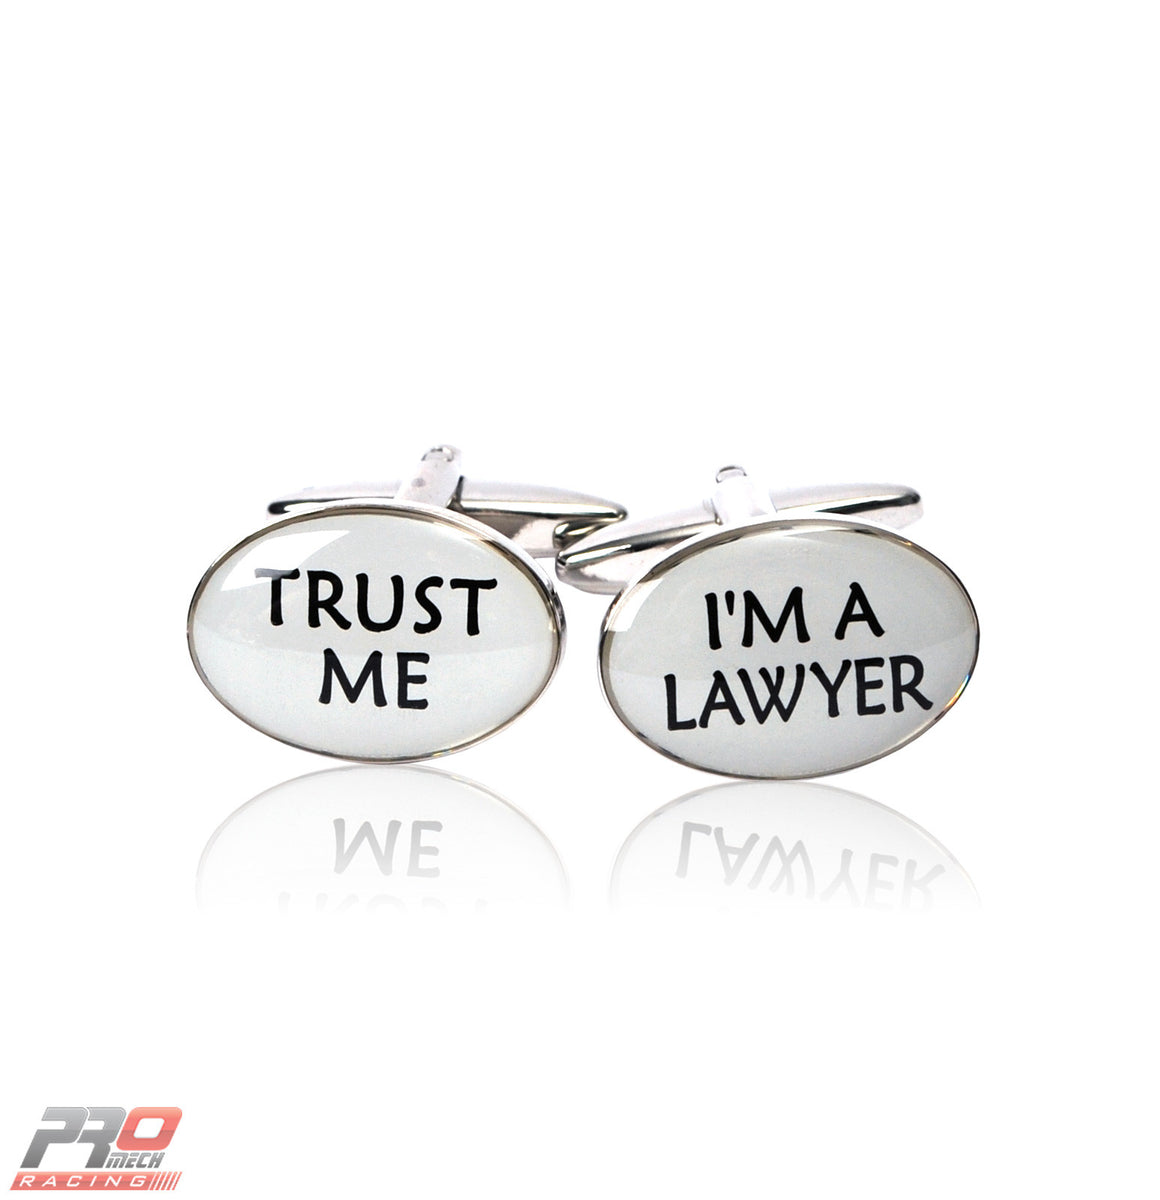 ProMech Racing Cufflinks "Trust Me" "I'm a Lawyer" with Racing Sound Box